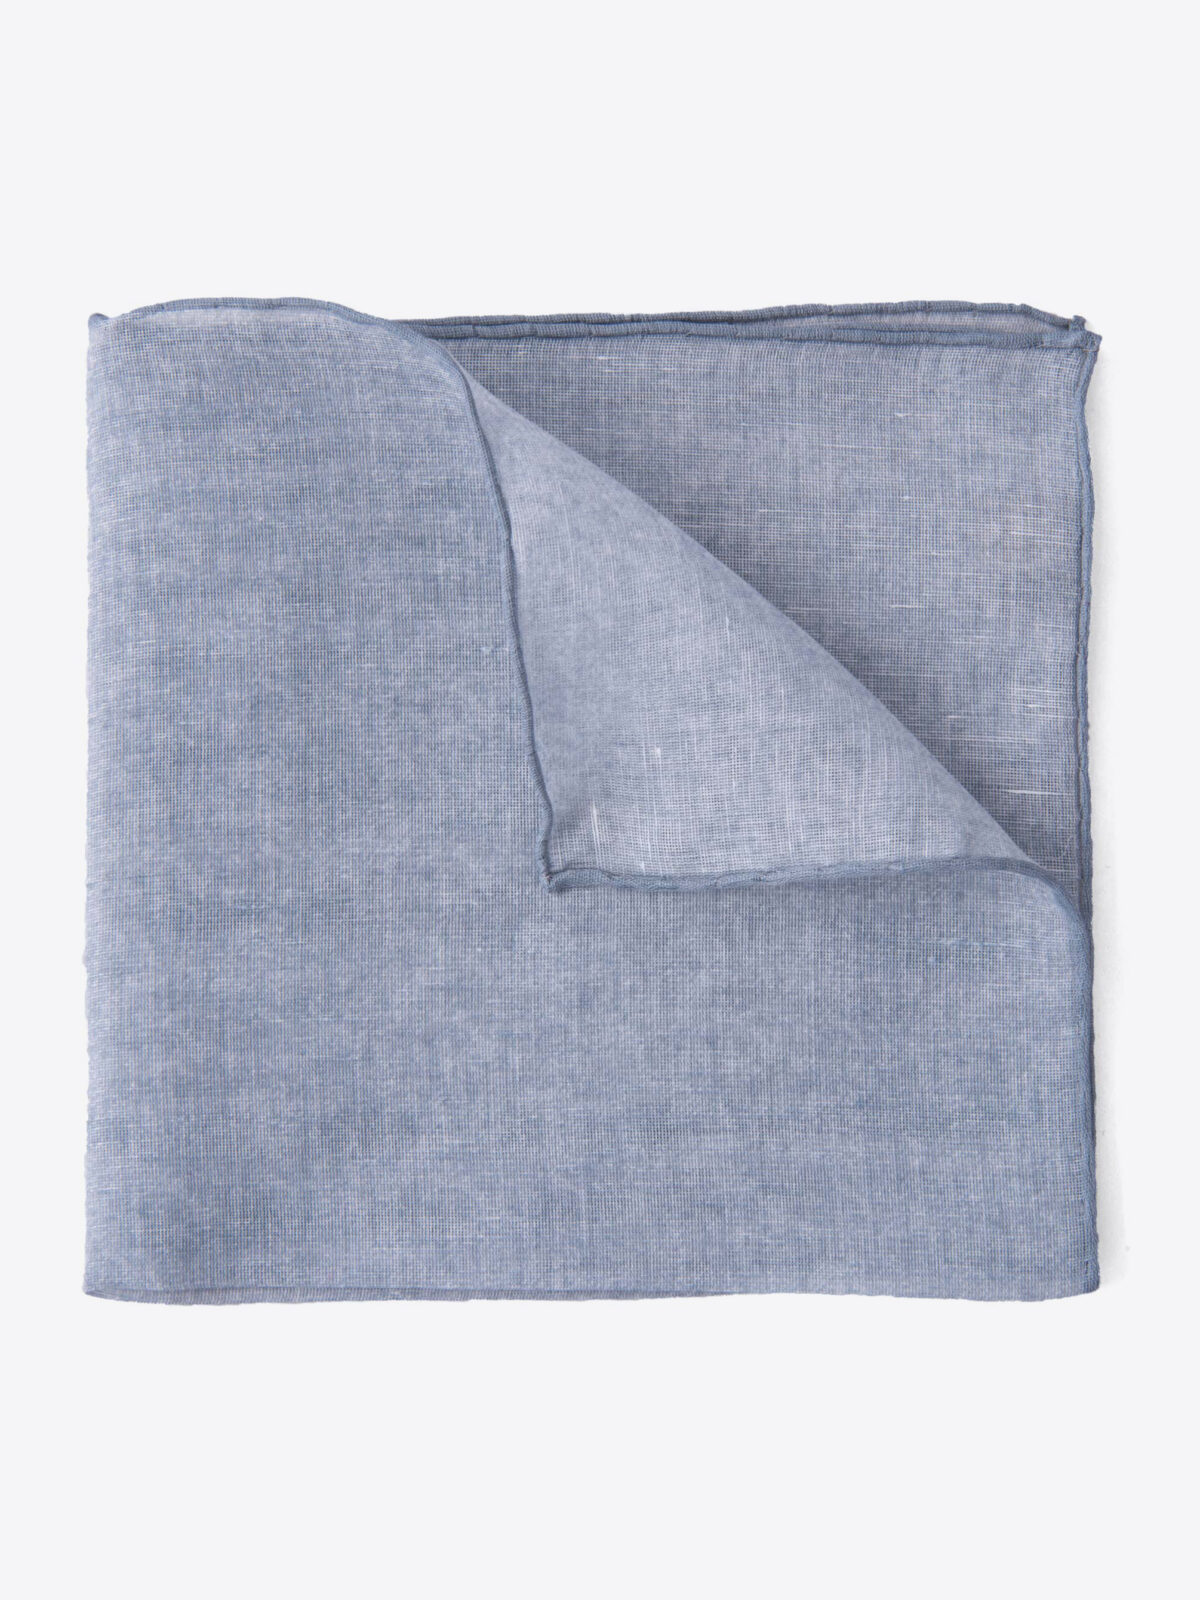 Grey Cotton Linen Pocket Square